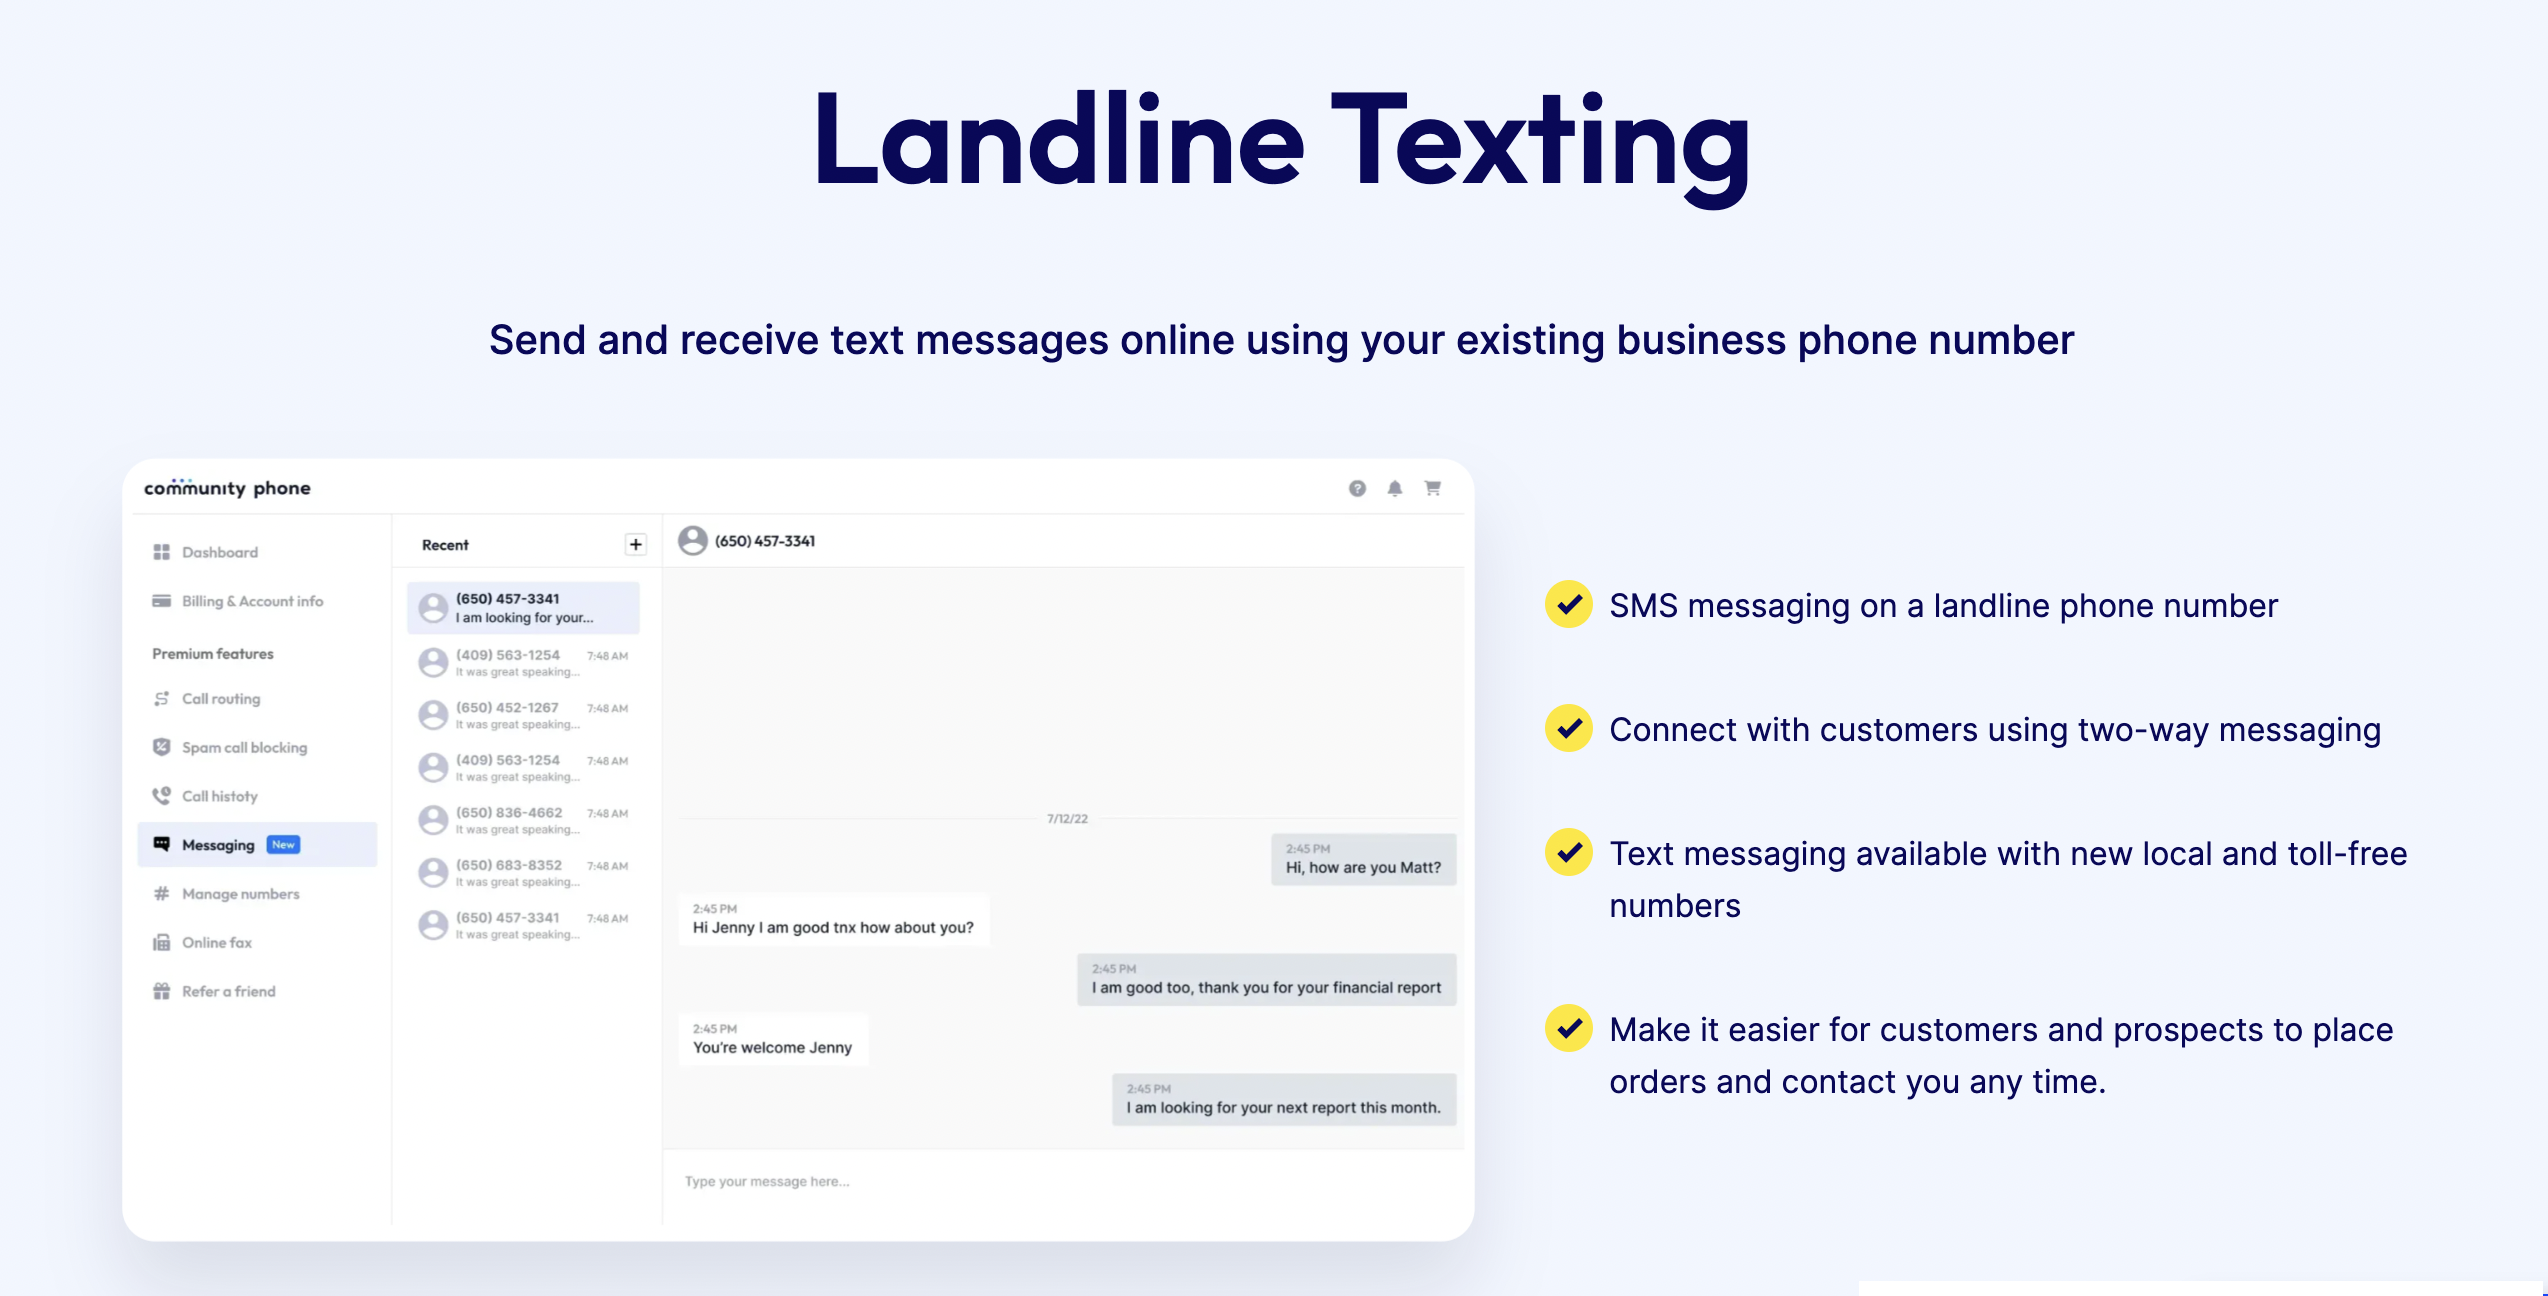 Landline texting